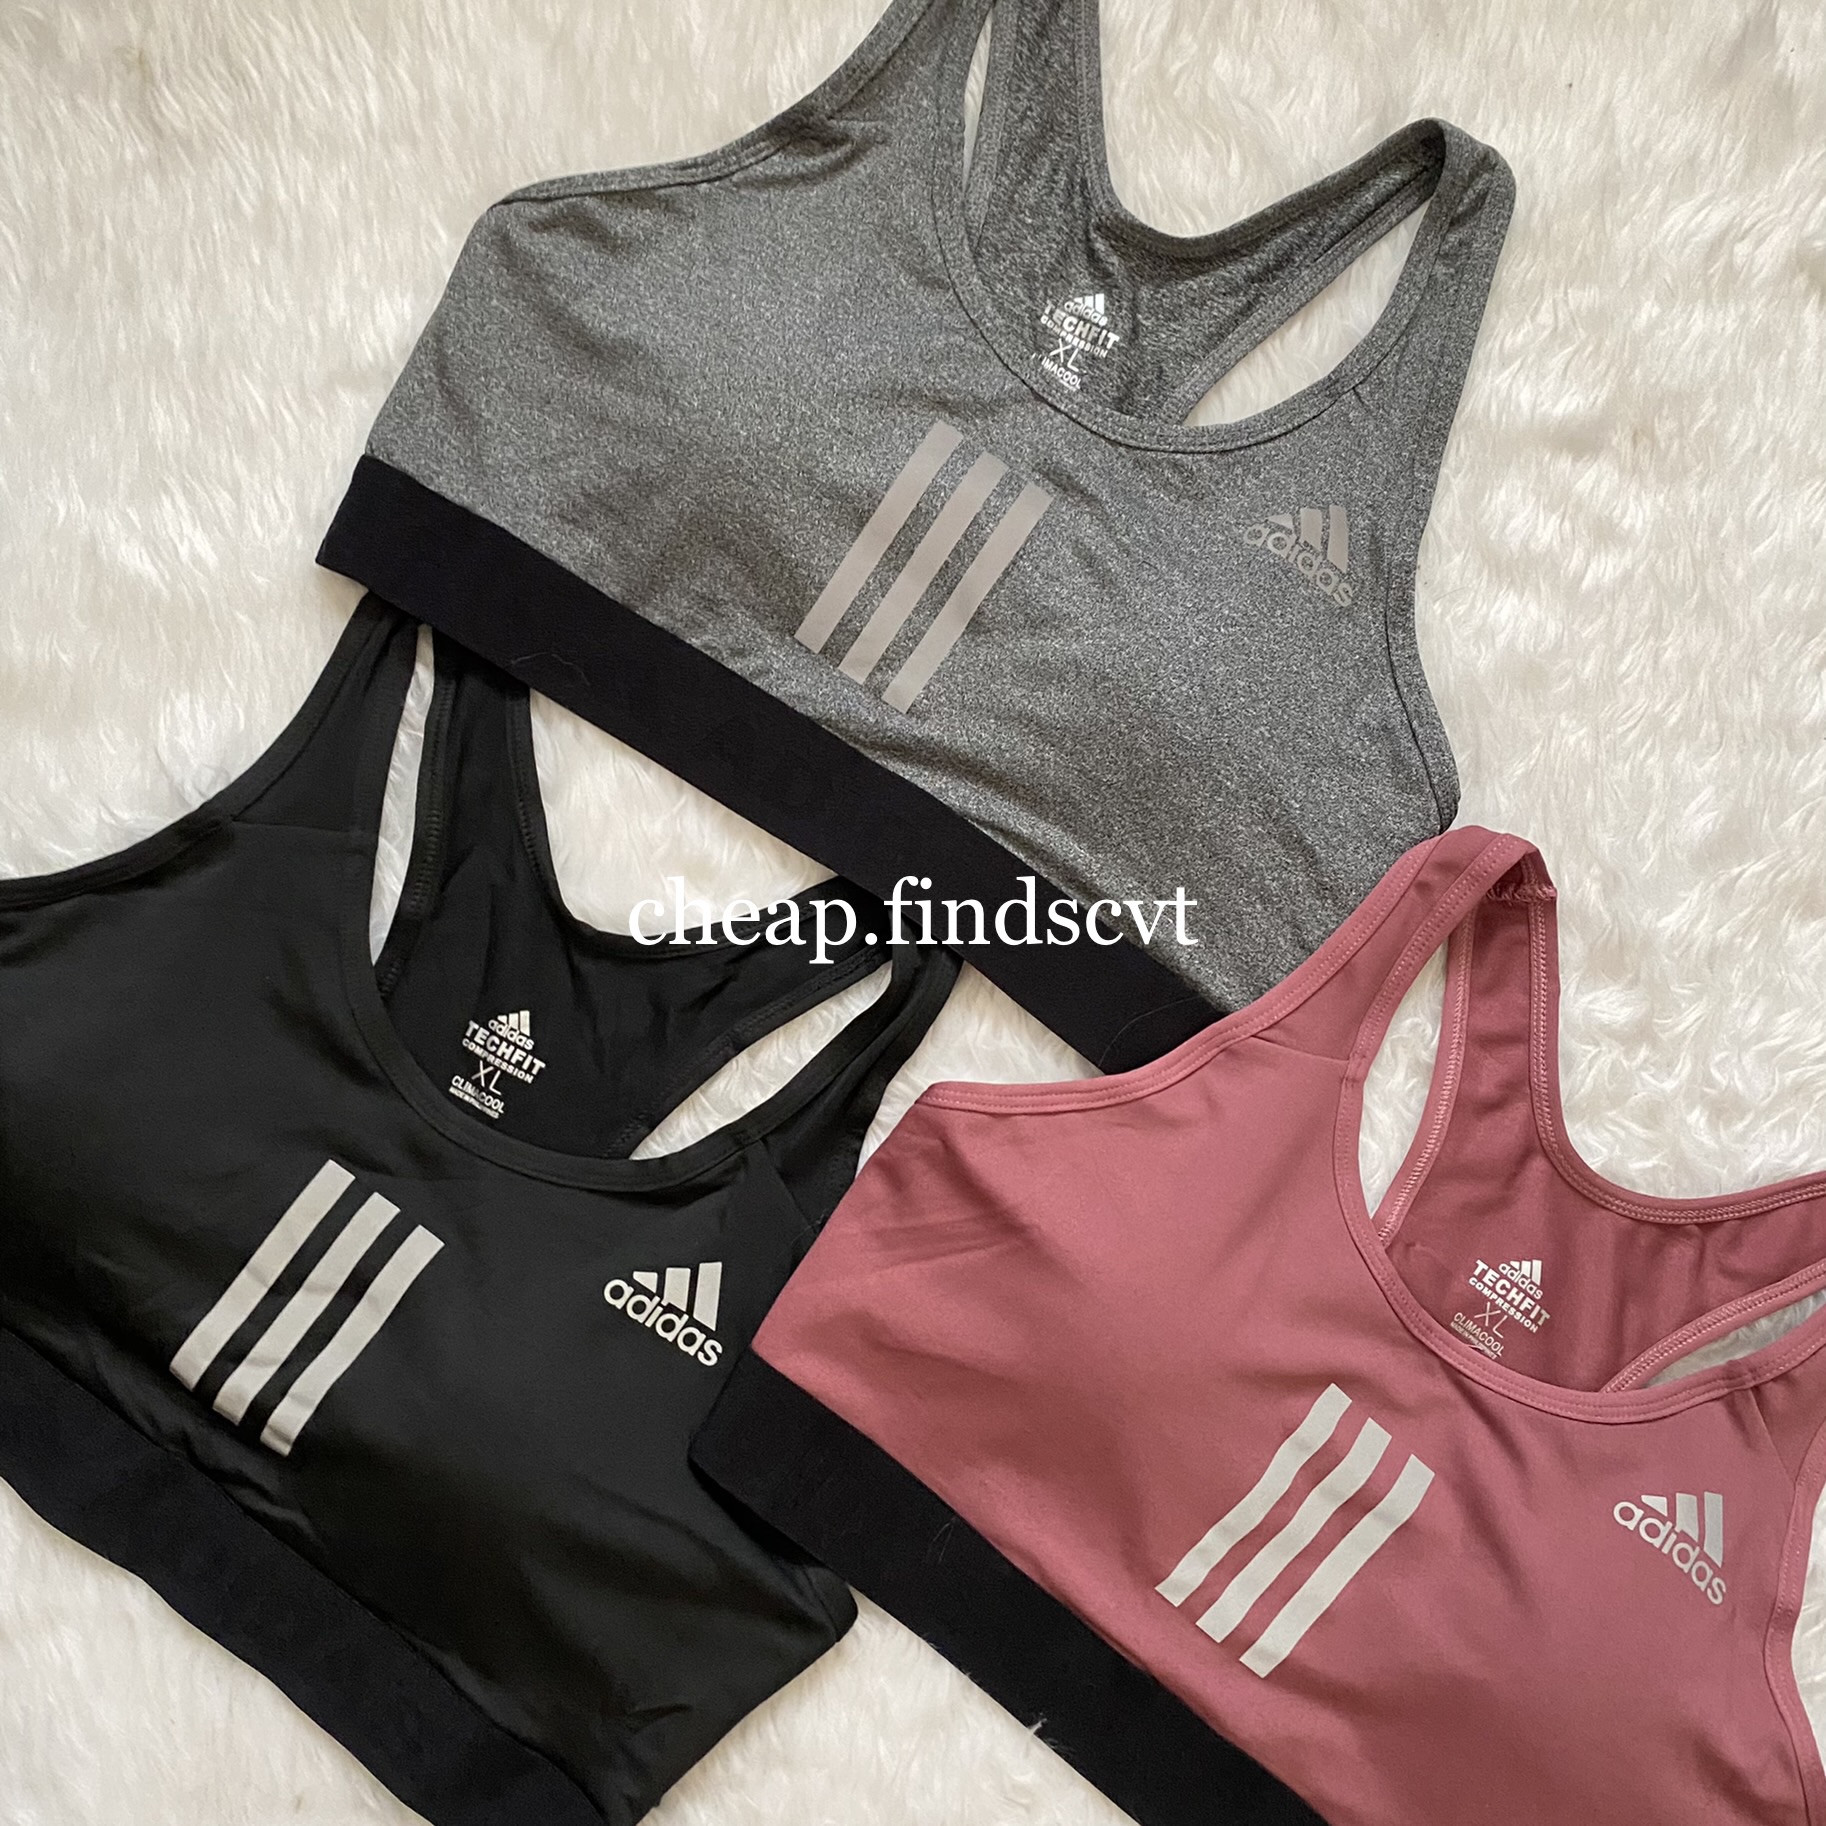 Adidas Techfit Compression gray & black clima cool sports bra size